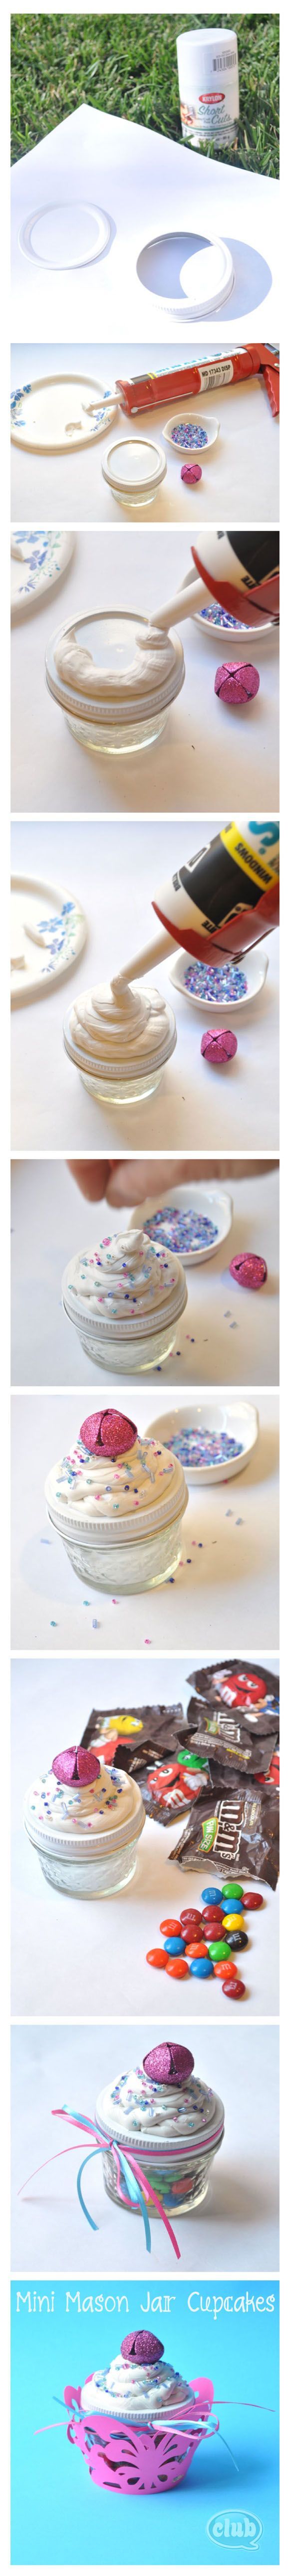 Mason jar cupcake gift containers